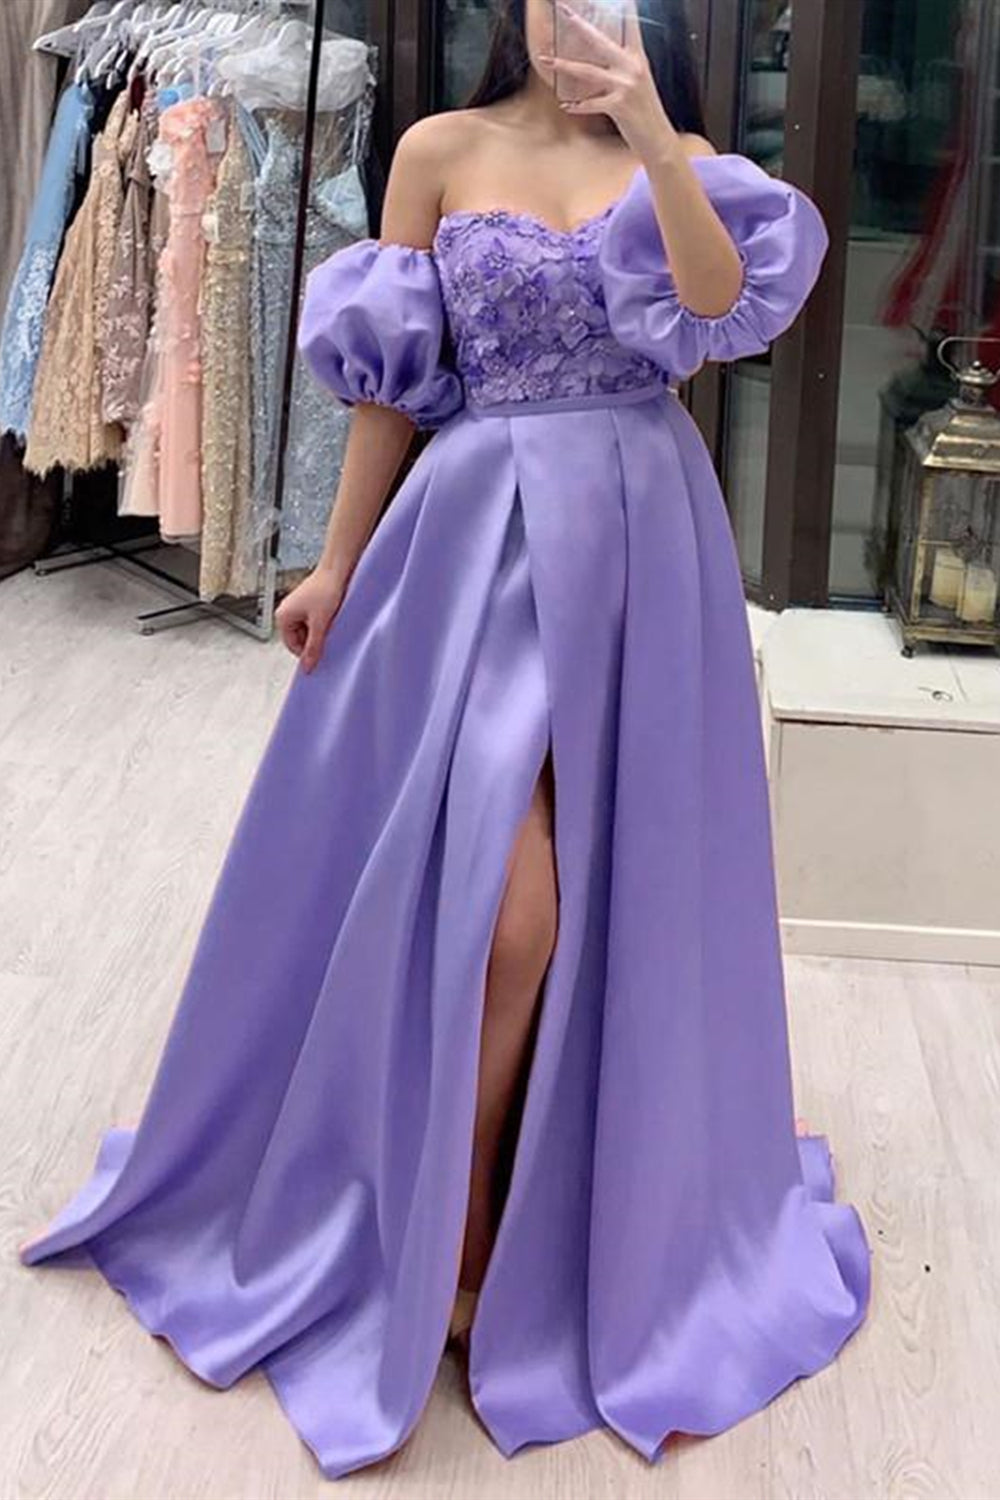 lavender dresses